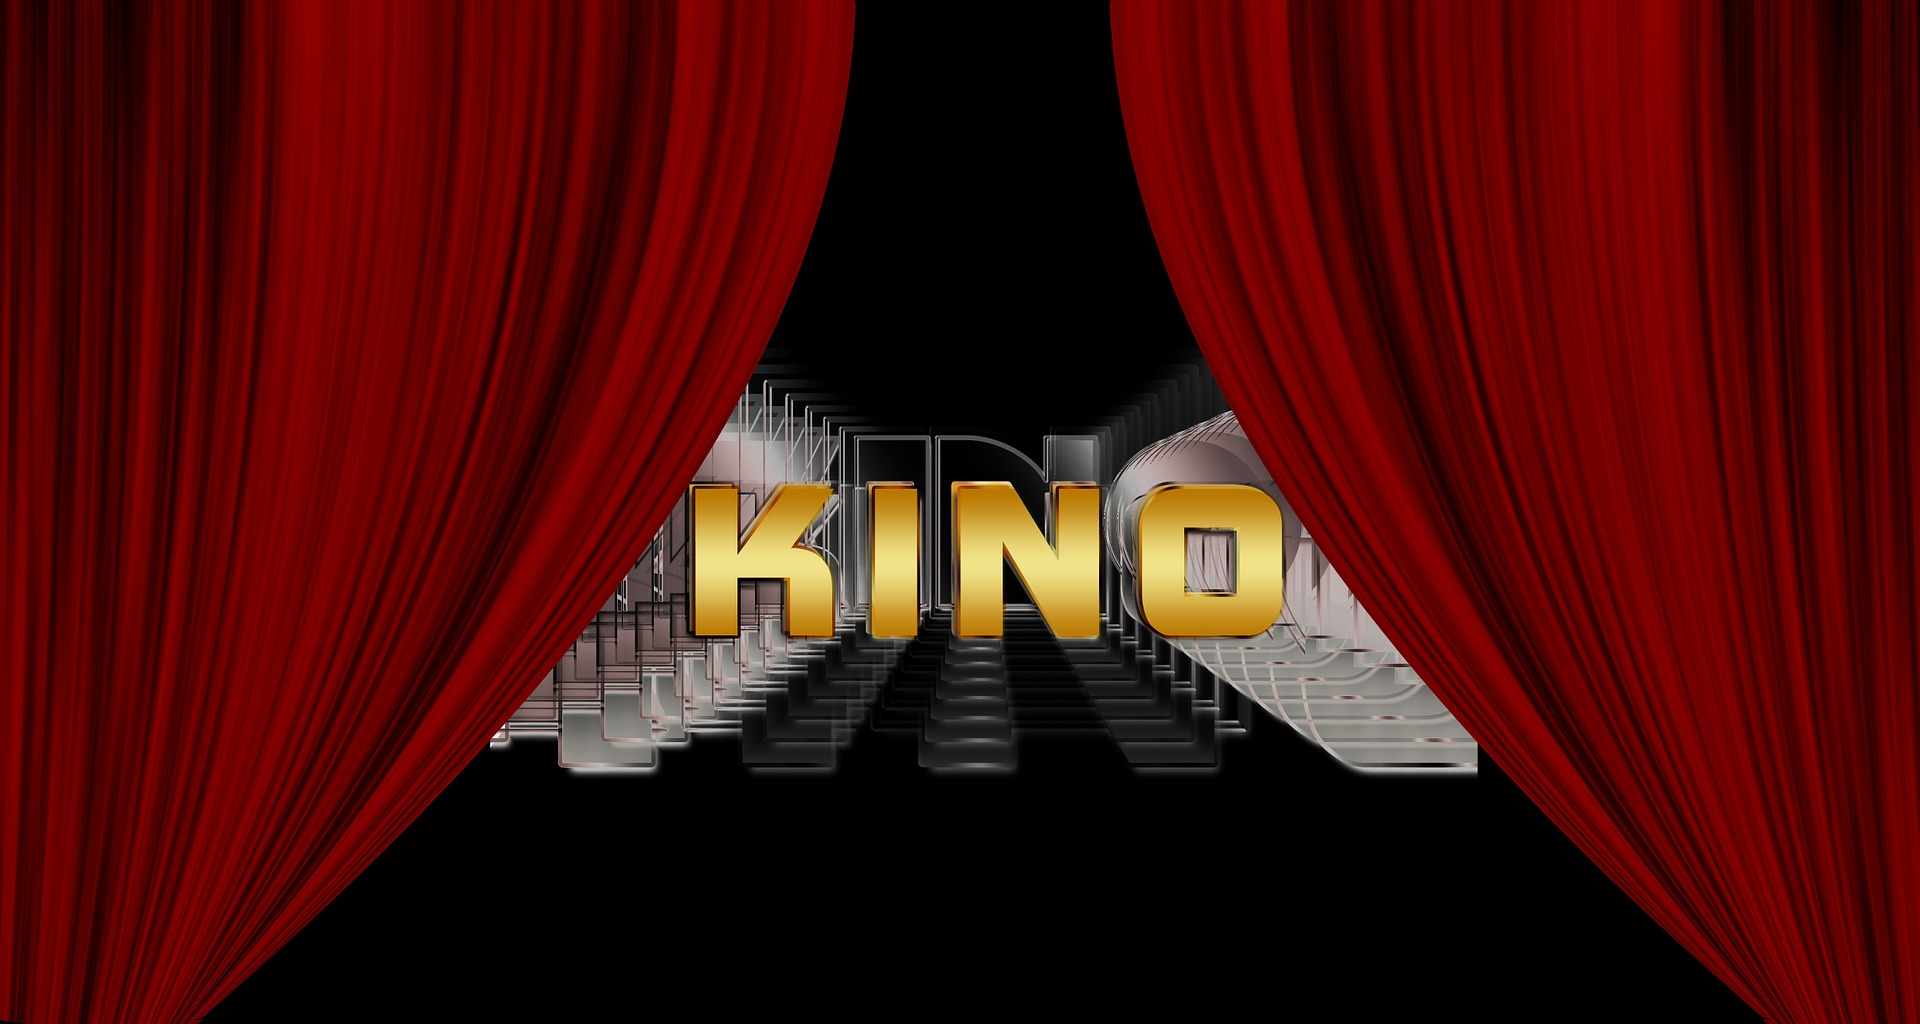 Kino (c) www.pixabay.com